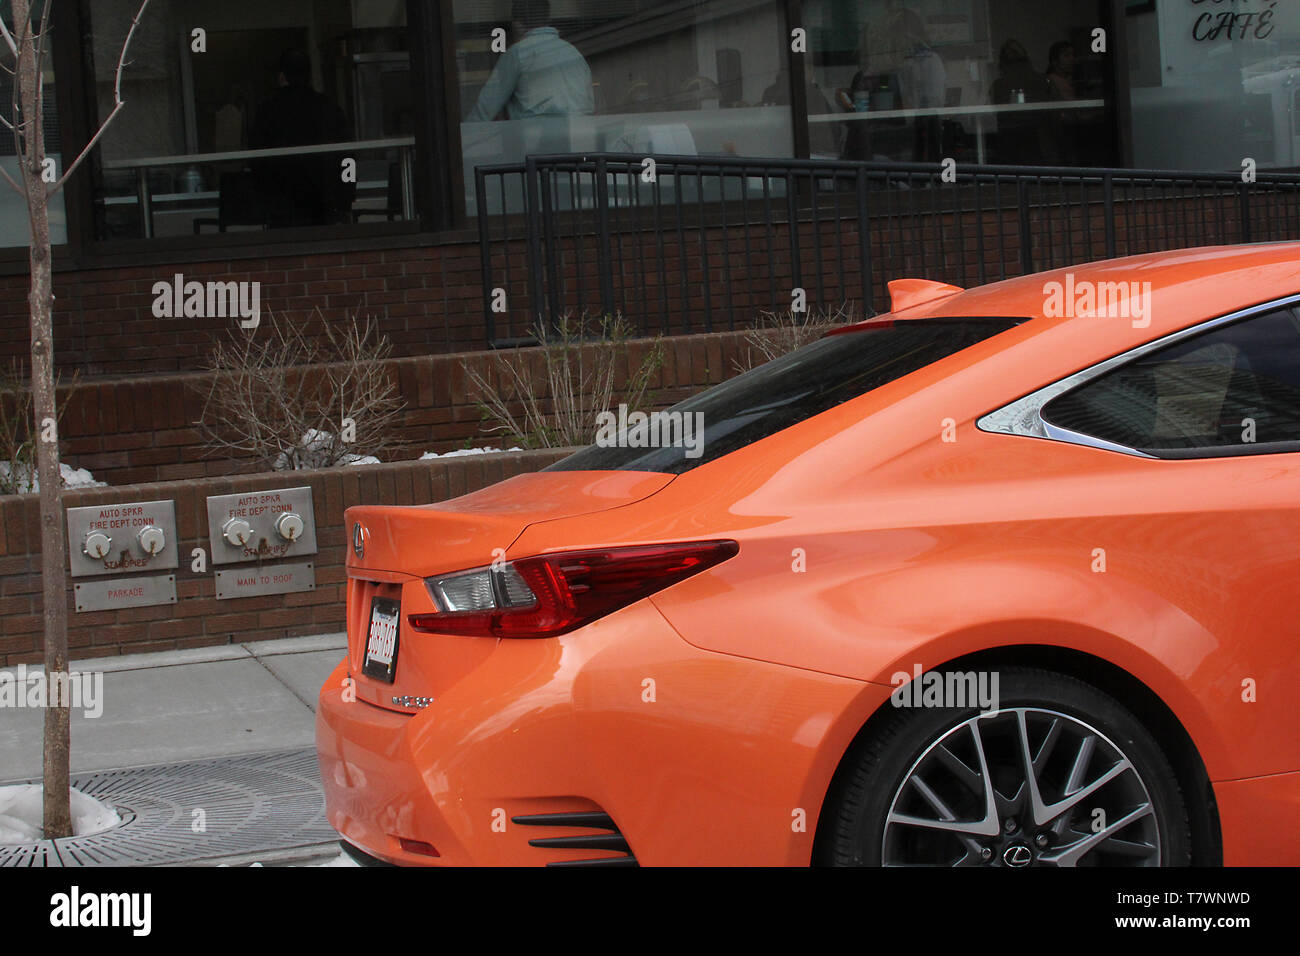 Classy looking orange sports car in Calgary, Alberta, Canada Stock Photo